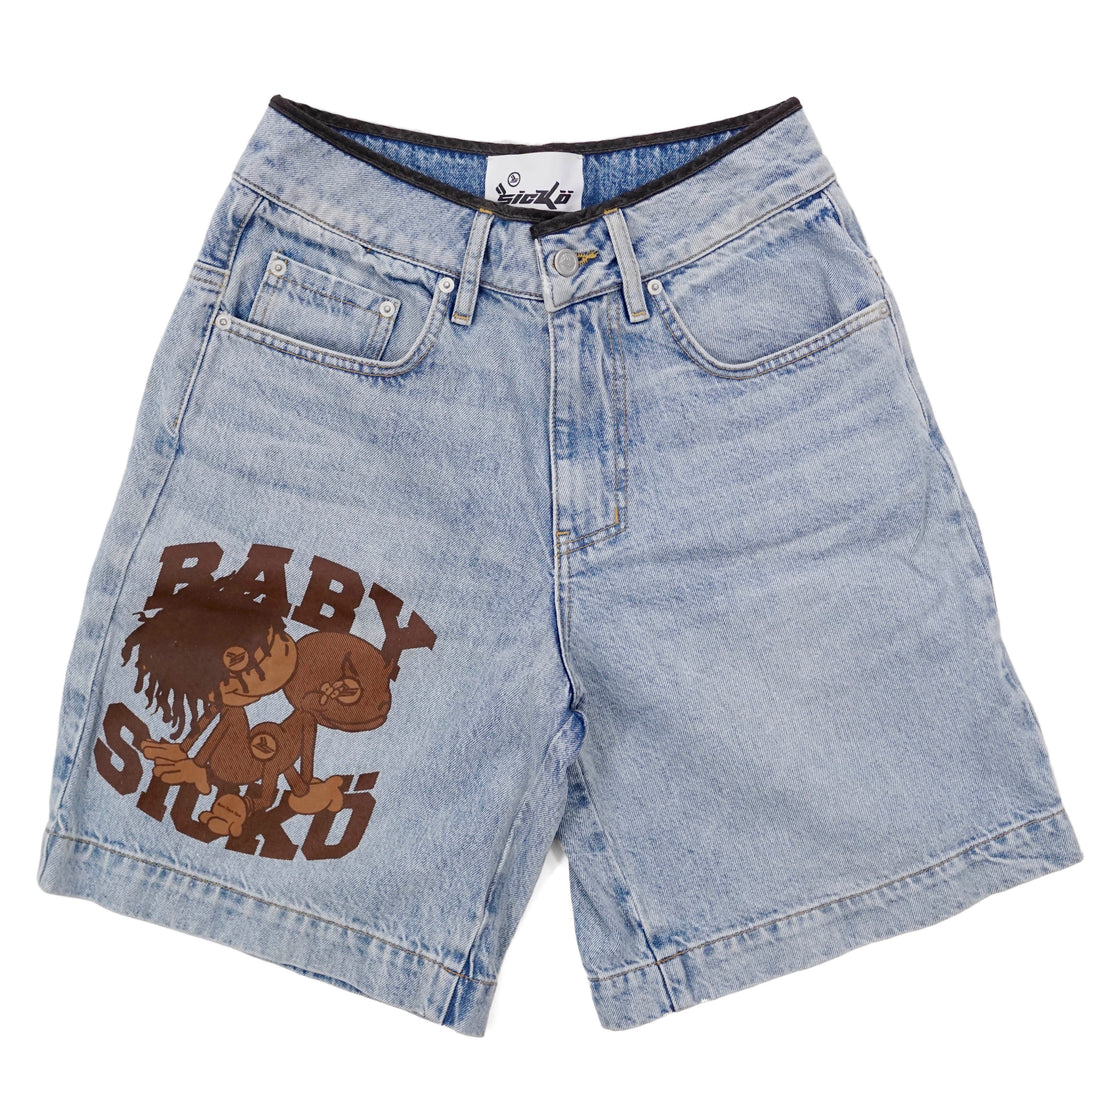 Baby Sicko Denim Shorts - light indigo / brown